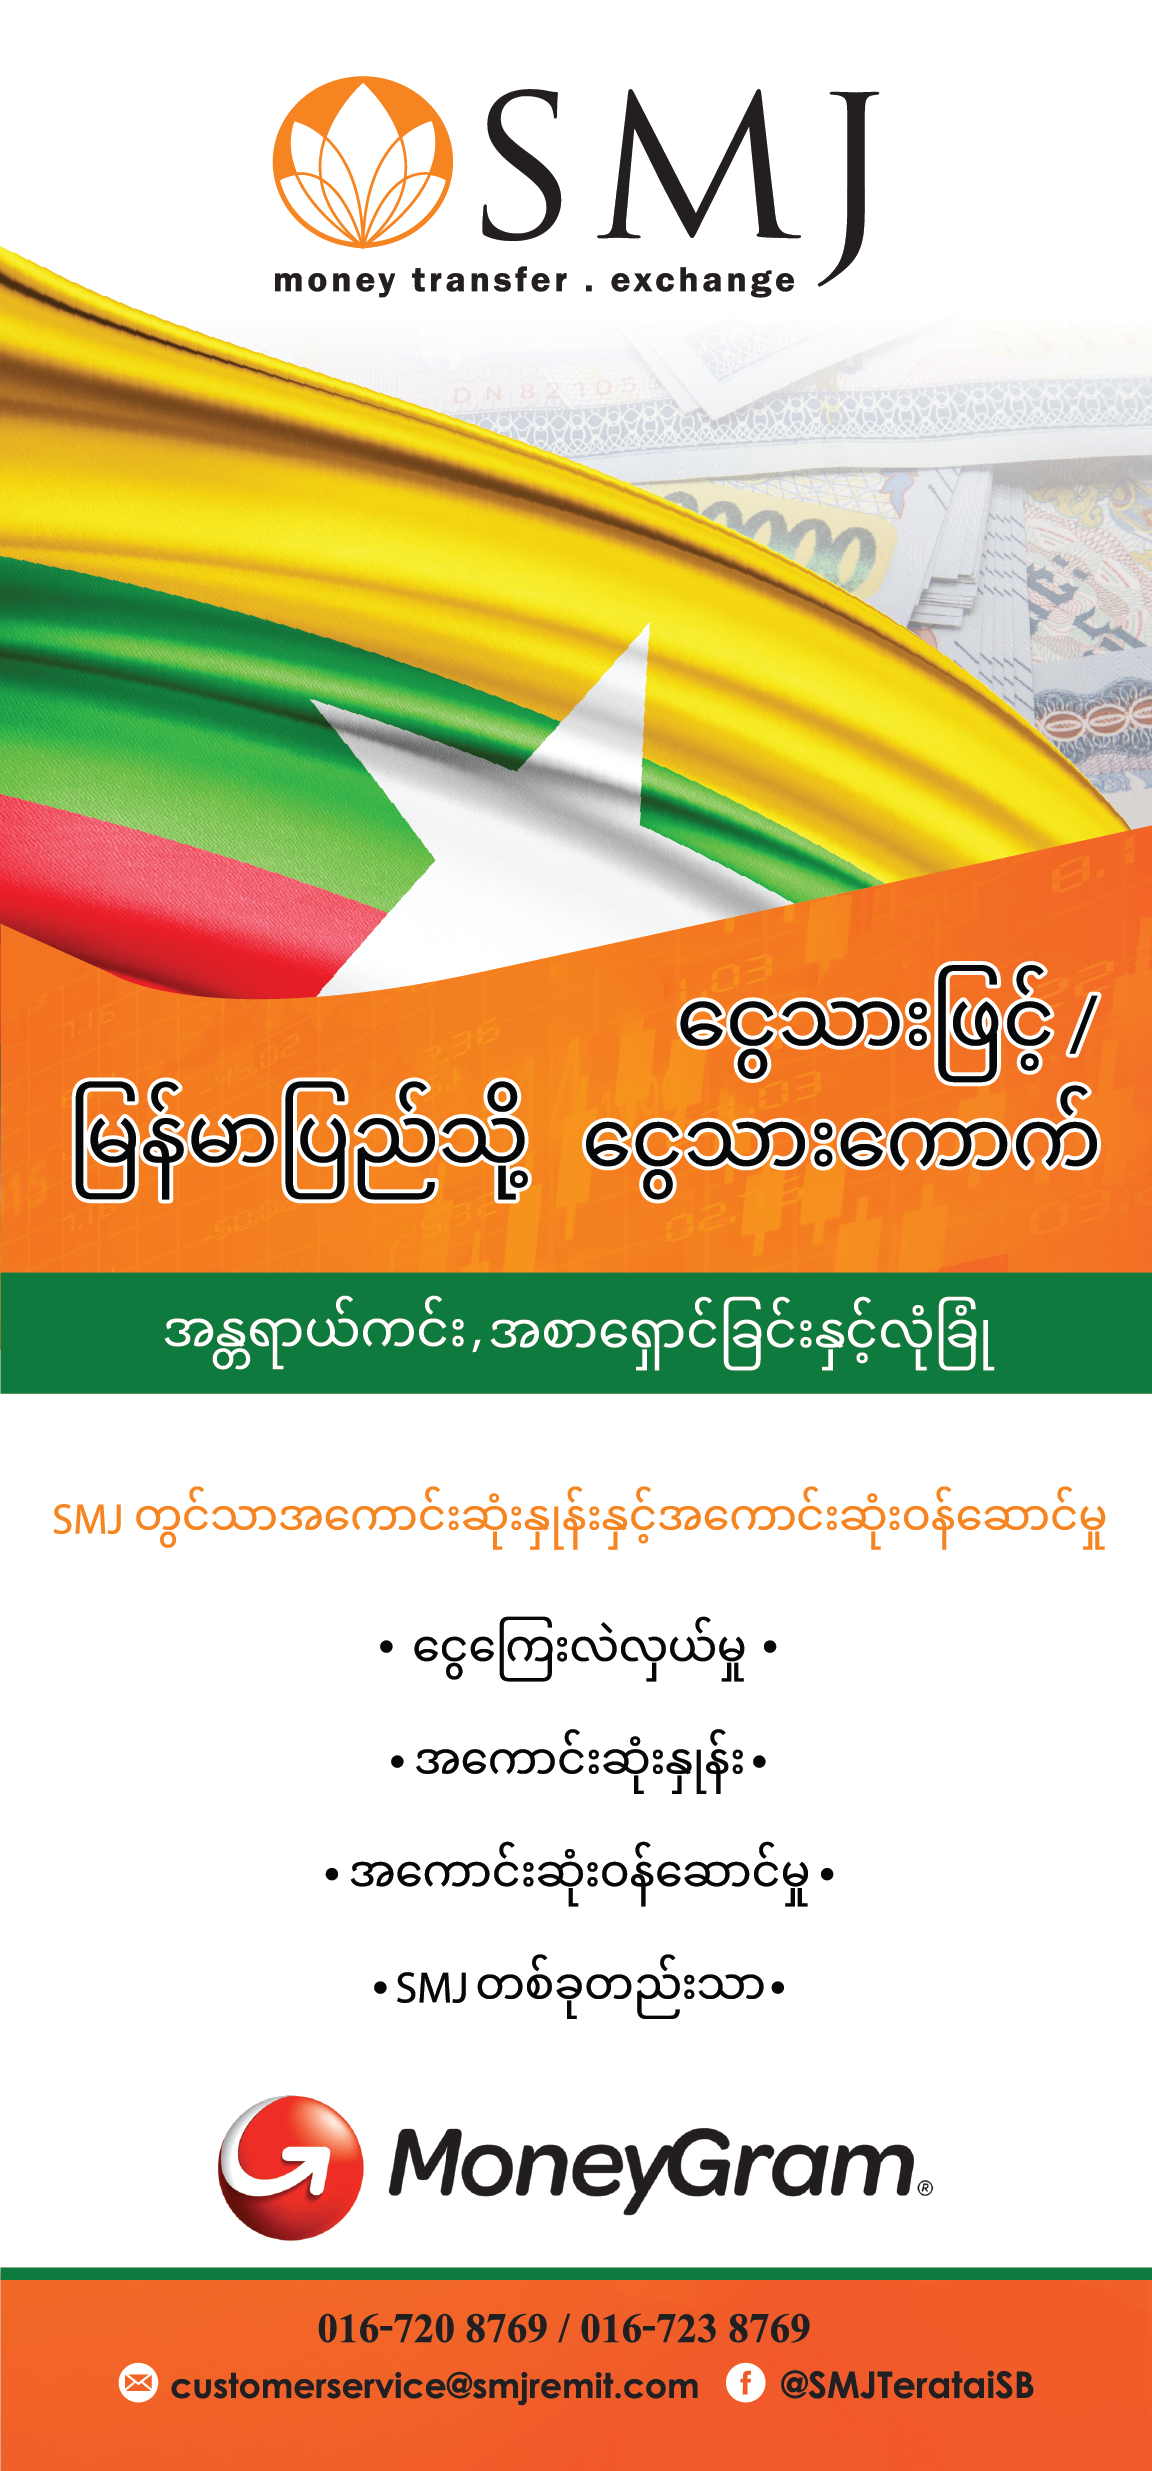 Send Money to Myanmar